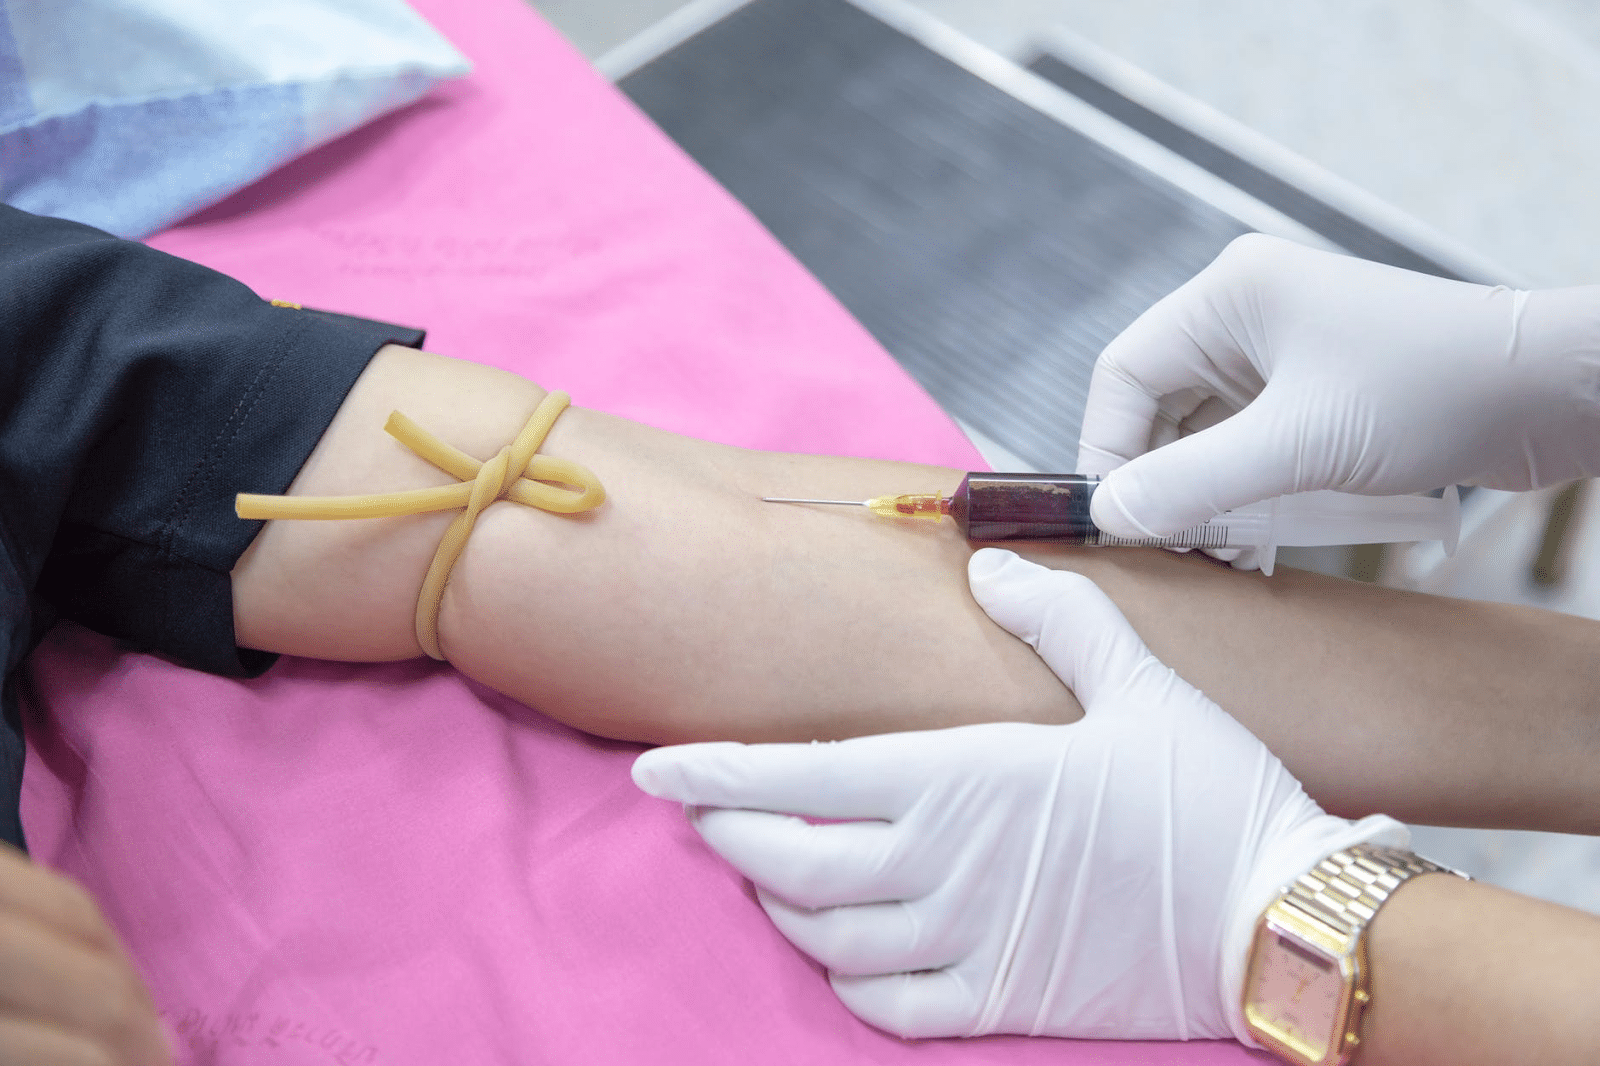 Selling plasma: A nurse draws blood for a physical exam